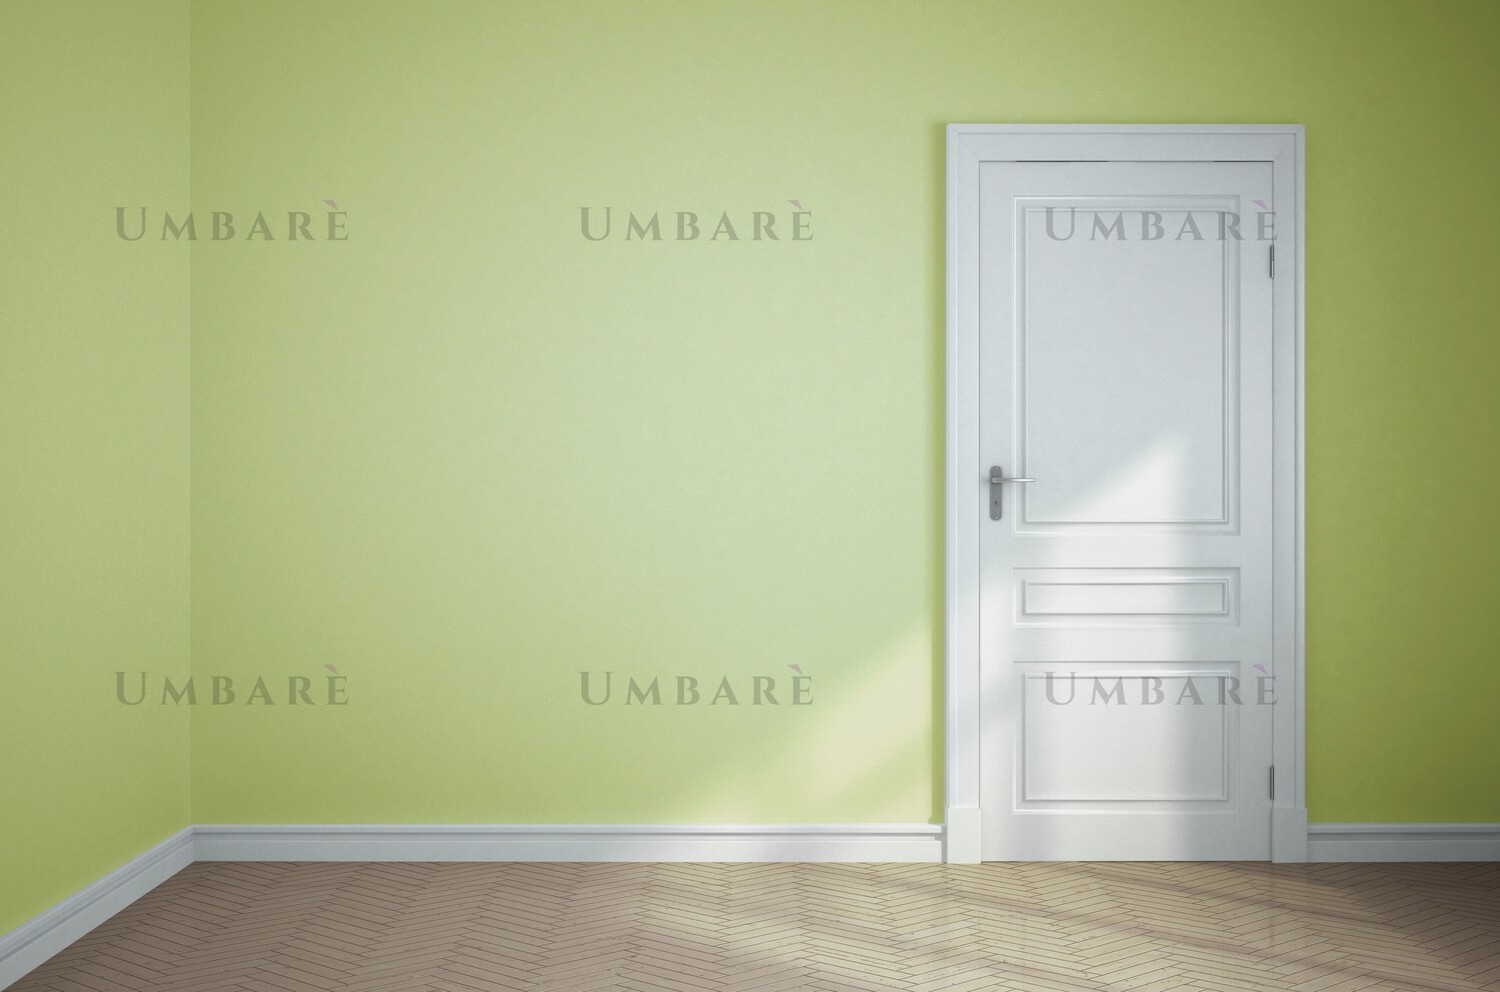 Umbare 3 Story Home Interior Painting House Refinish Elite